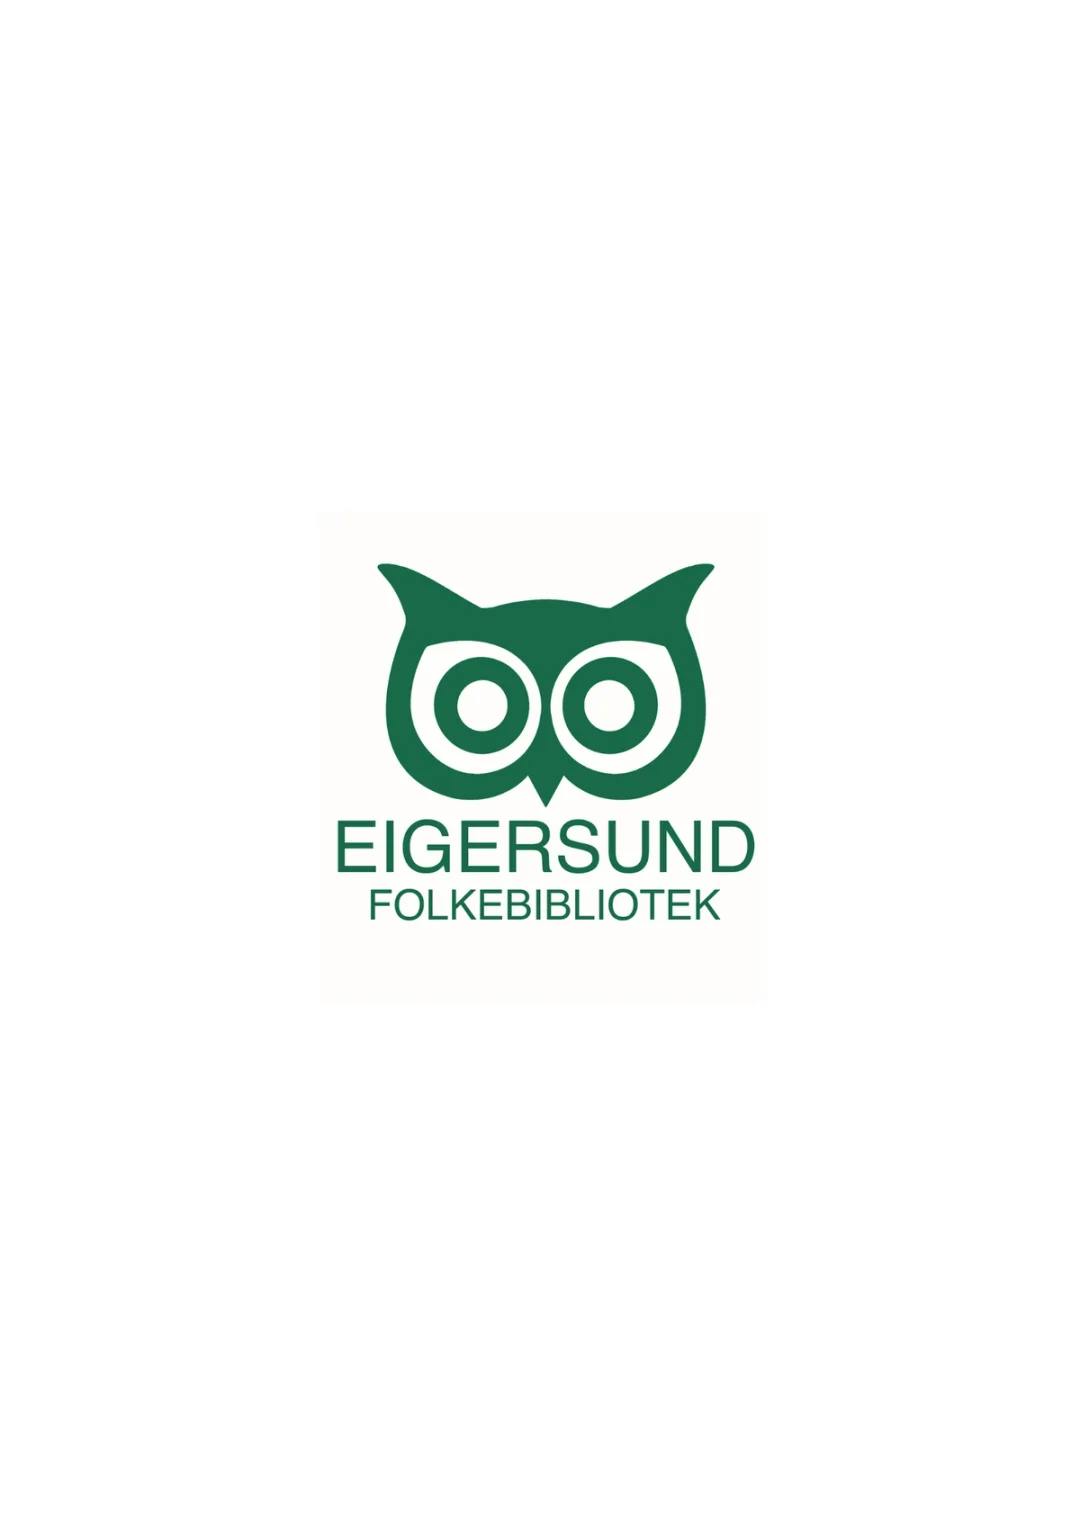 Logoen til Eigersund folkebibliotek som er en mørkegrønn ugle.